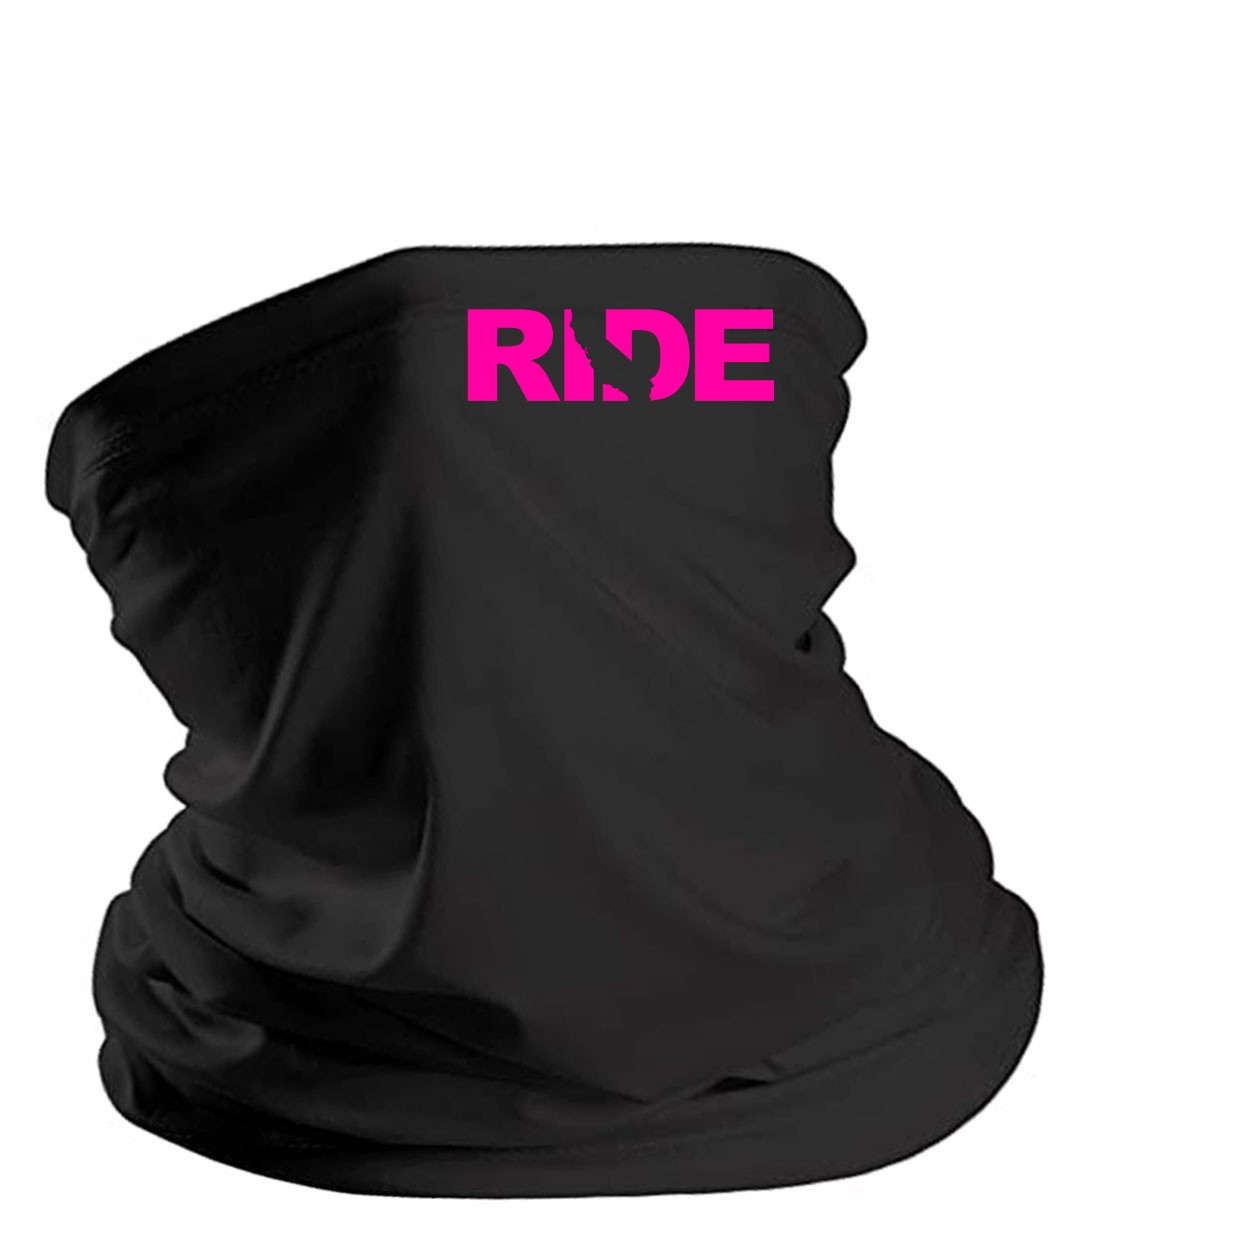 Ride California Night Out Lightweight Neck Gaiter Face Mask Black (Pink Logo)